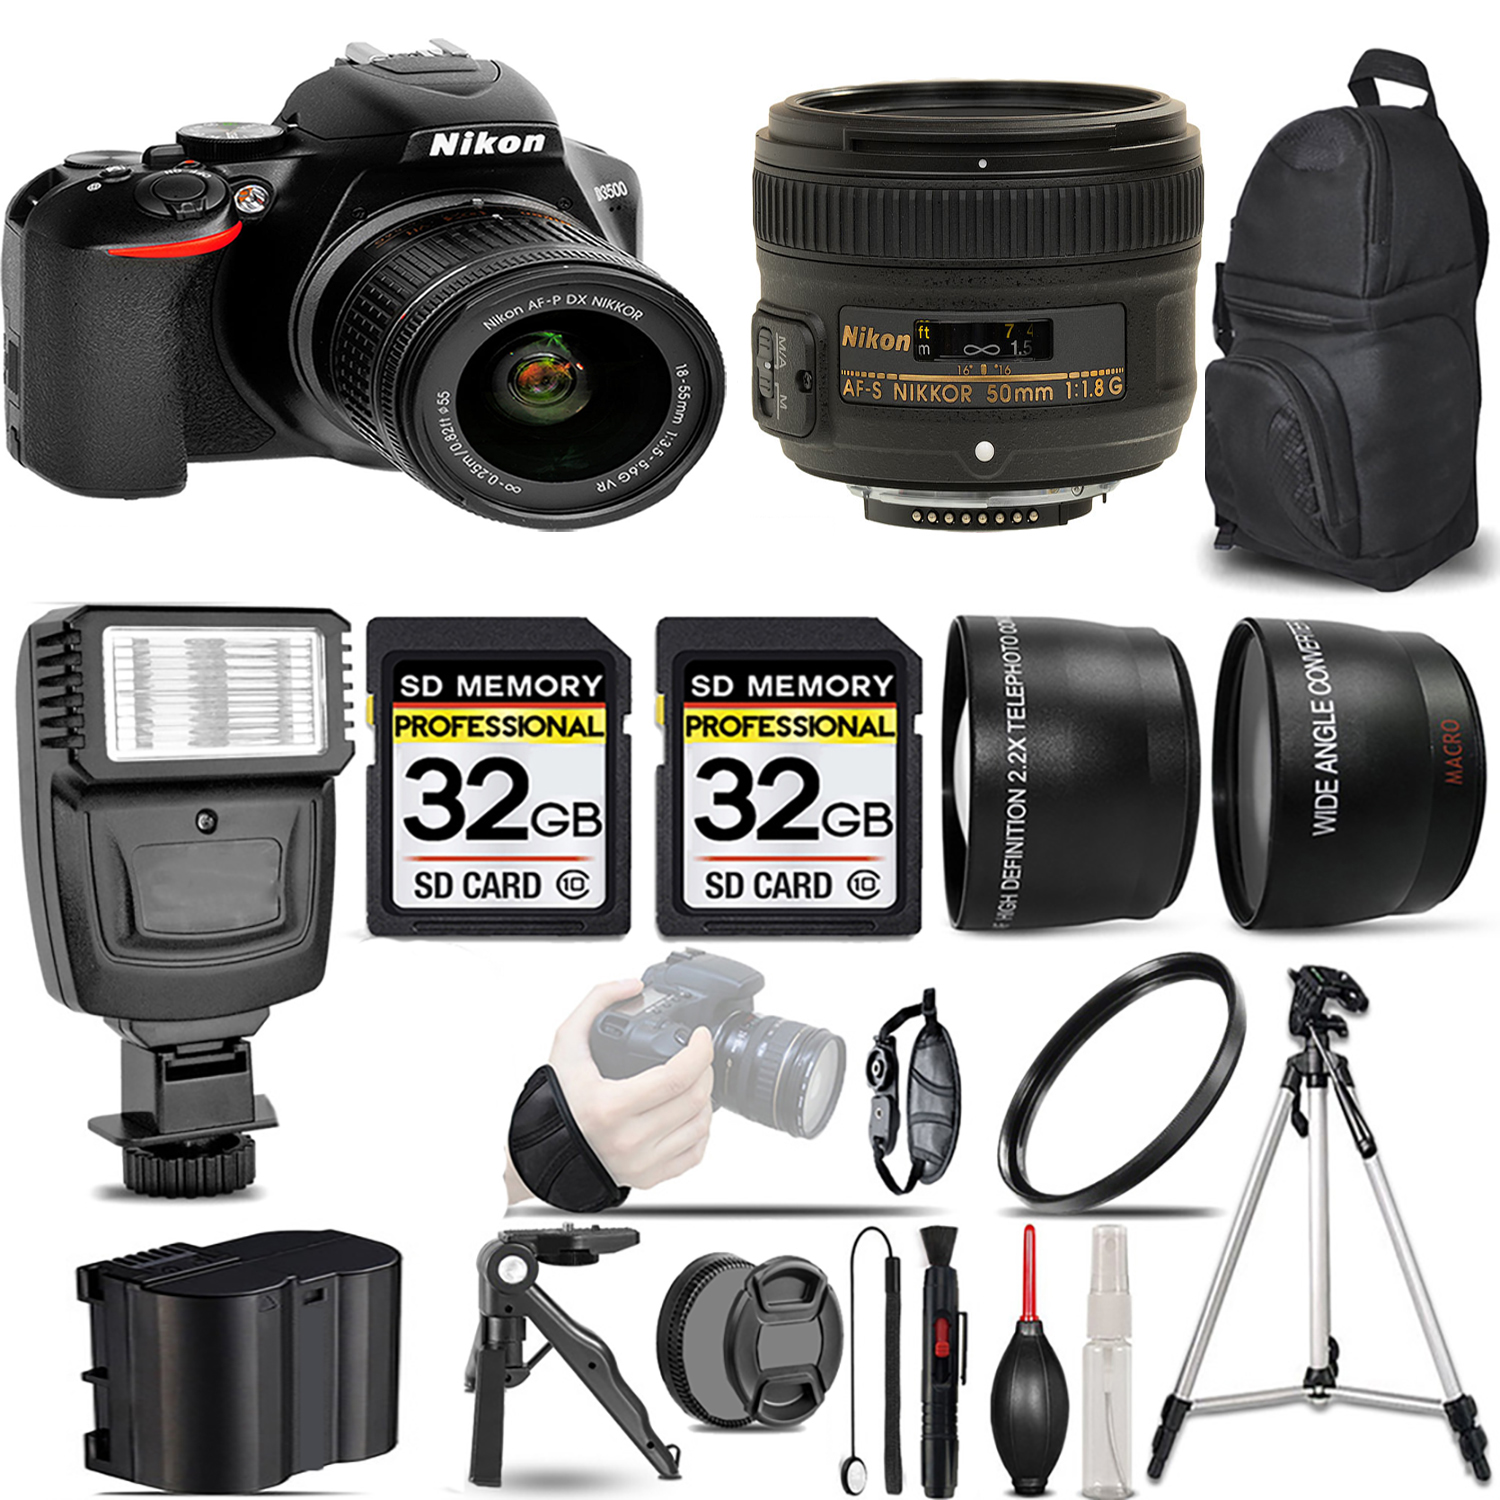 D3500 DSLR Camera with 18-55mm Lens + 50mm f/1.8 Lens + Flash + 64GB -  Kit *FREE SHIPPING*